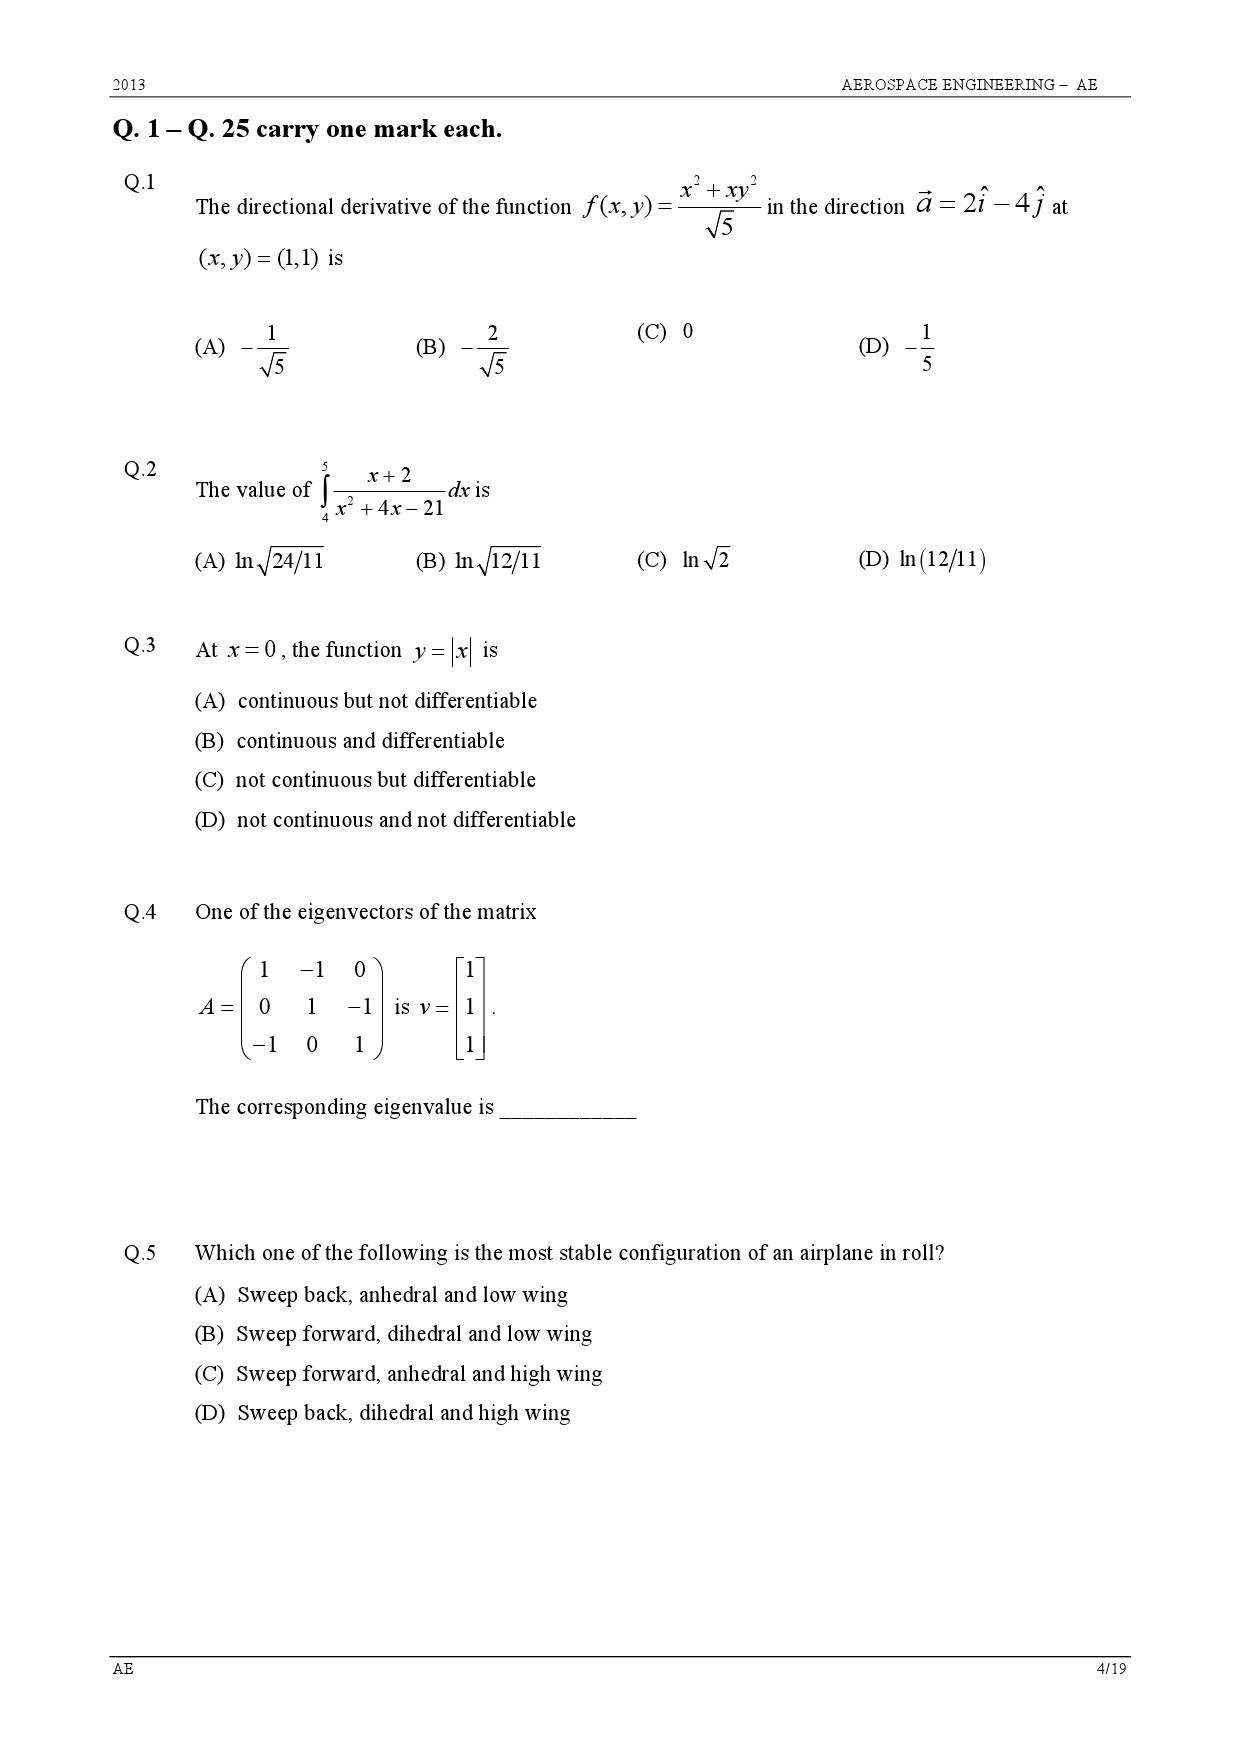 GATE Exam 2013 Aerospace Engineering Question Paper 4